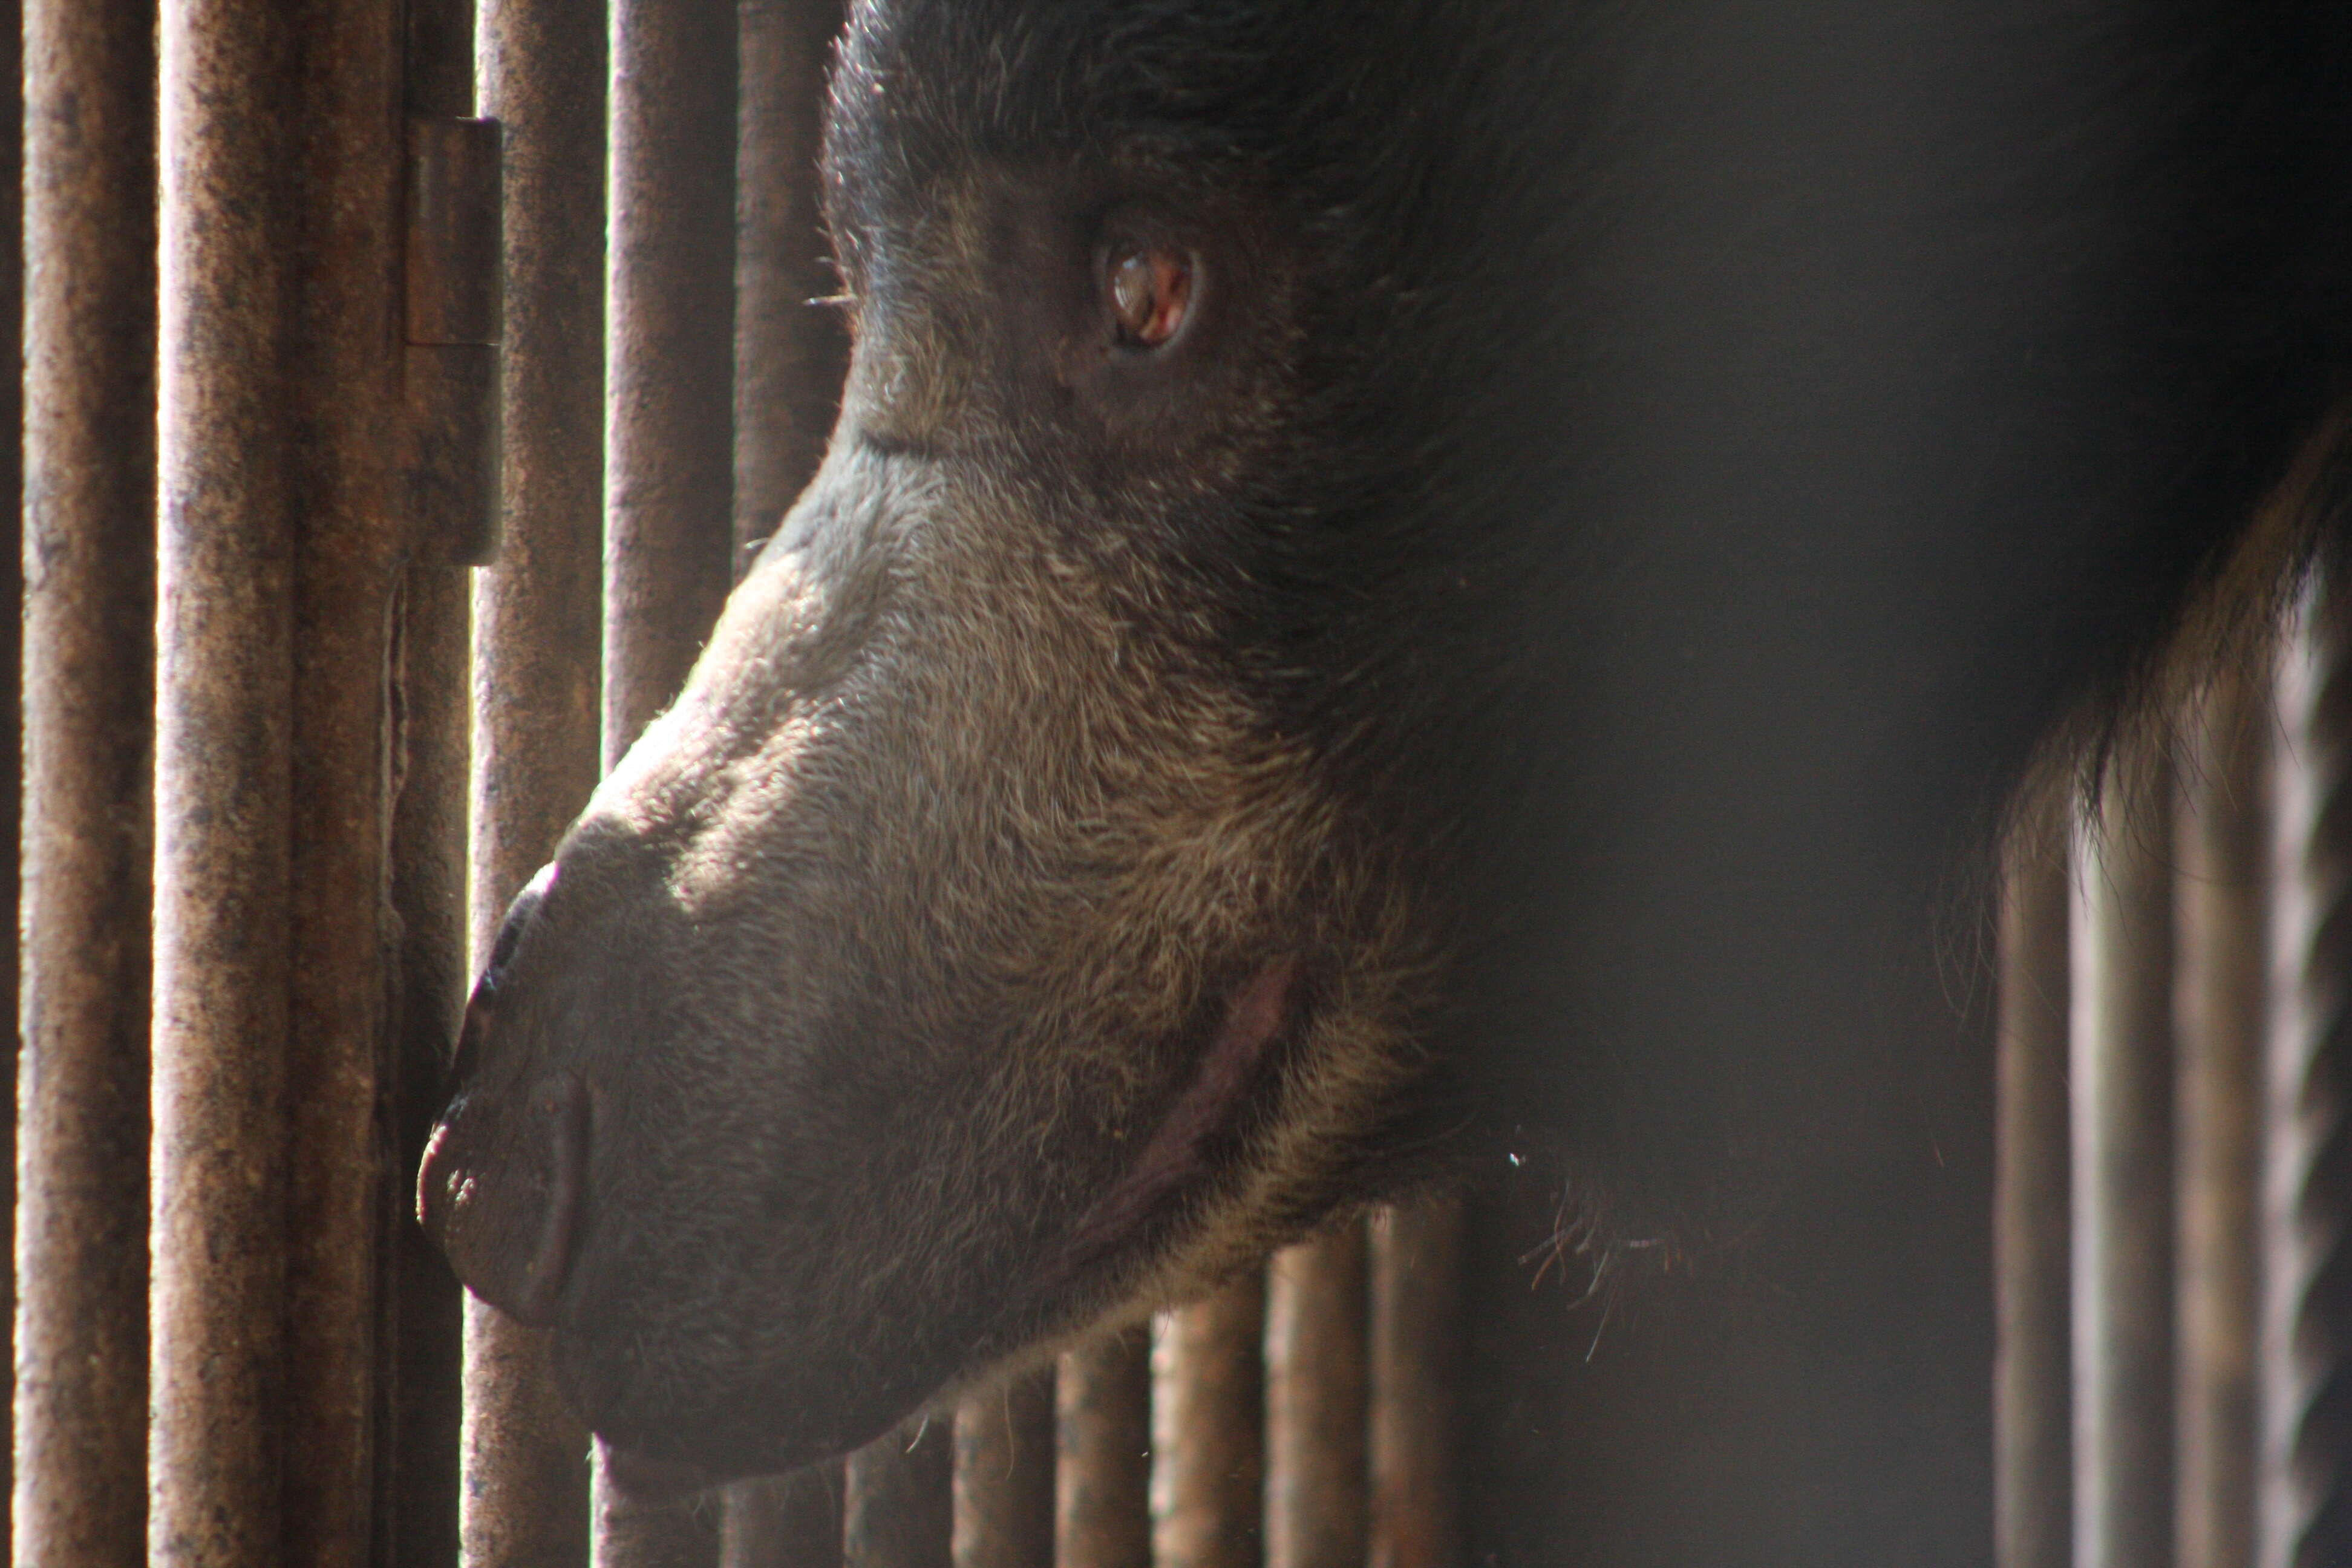 Bear peering through bars of zoo enclosure